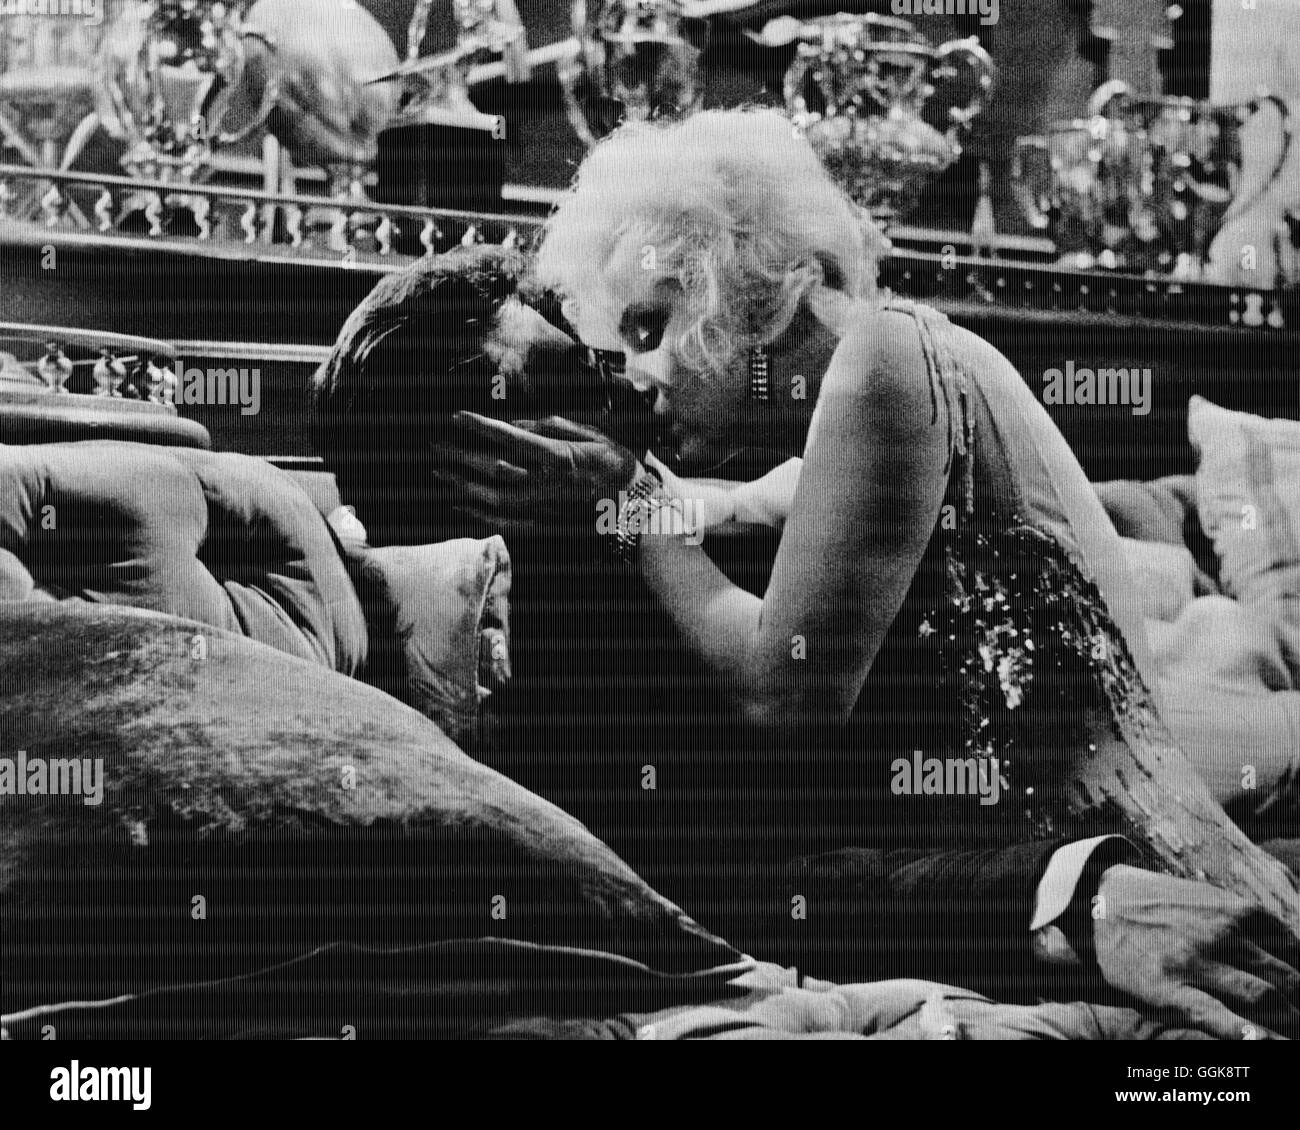 MANCHE MÖGEN'S HEISS / Some like it hot USA 1959 / Billy Wilder TONY CURTIS (Joe/Josephine) und MARILYN MONROE (Sugar) Regie: Billy Wilder aka. Some like it hot Stock Photo